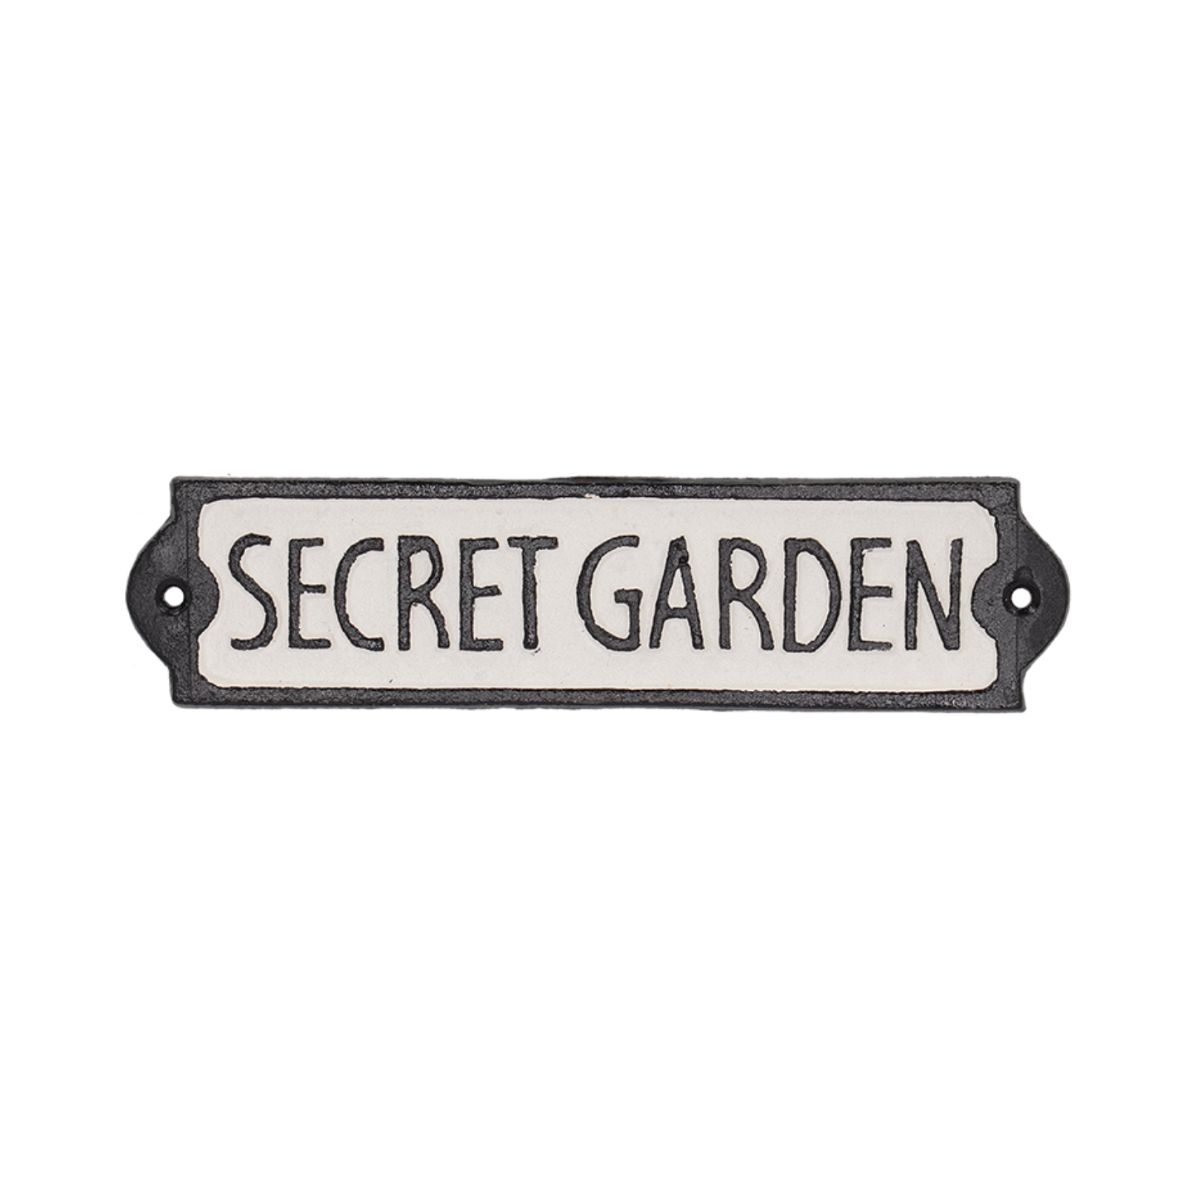 Decoratiuni de exterior - Decoratiune metalica de usa alb/negru 21,2 x H 5,1 cm "Secret Garden", hectarul.ro